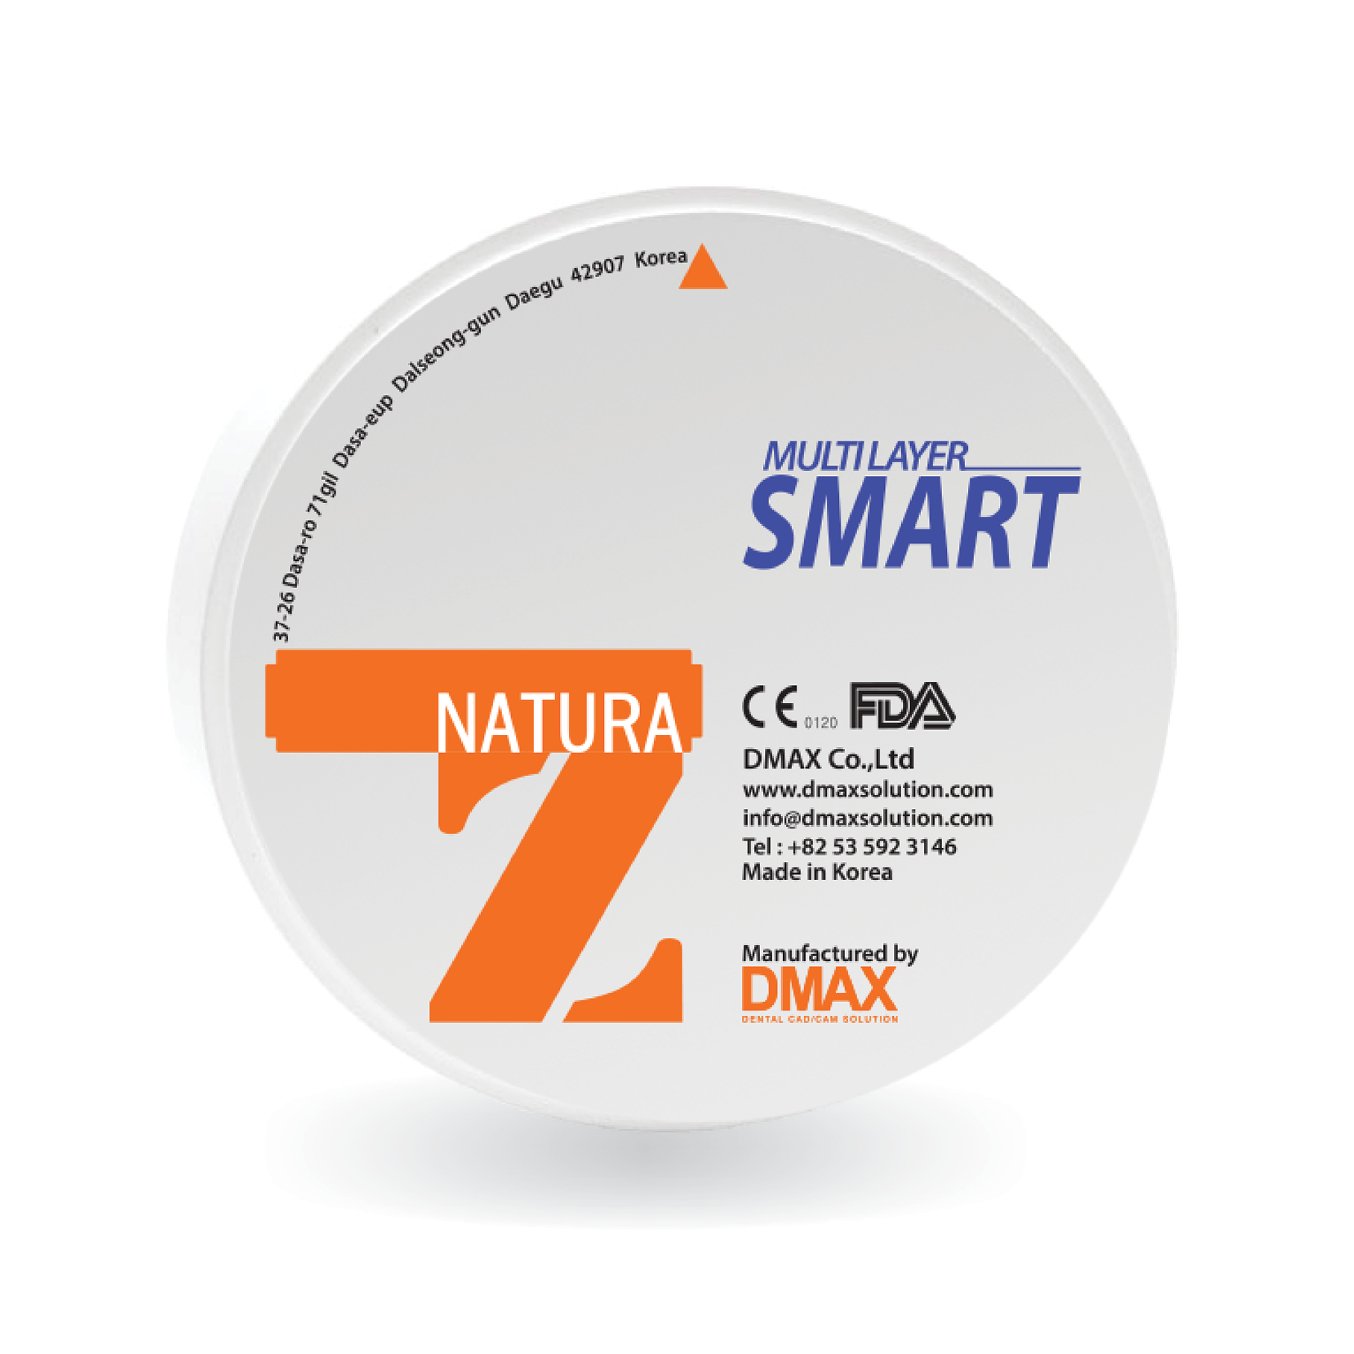 DMAX Smart Multilayer (700-1,100 MPa), Zirconia Block, Dental Laboratory Block